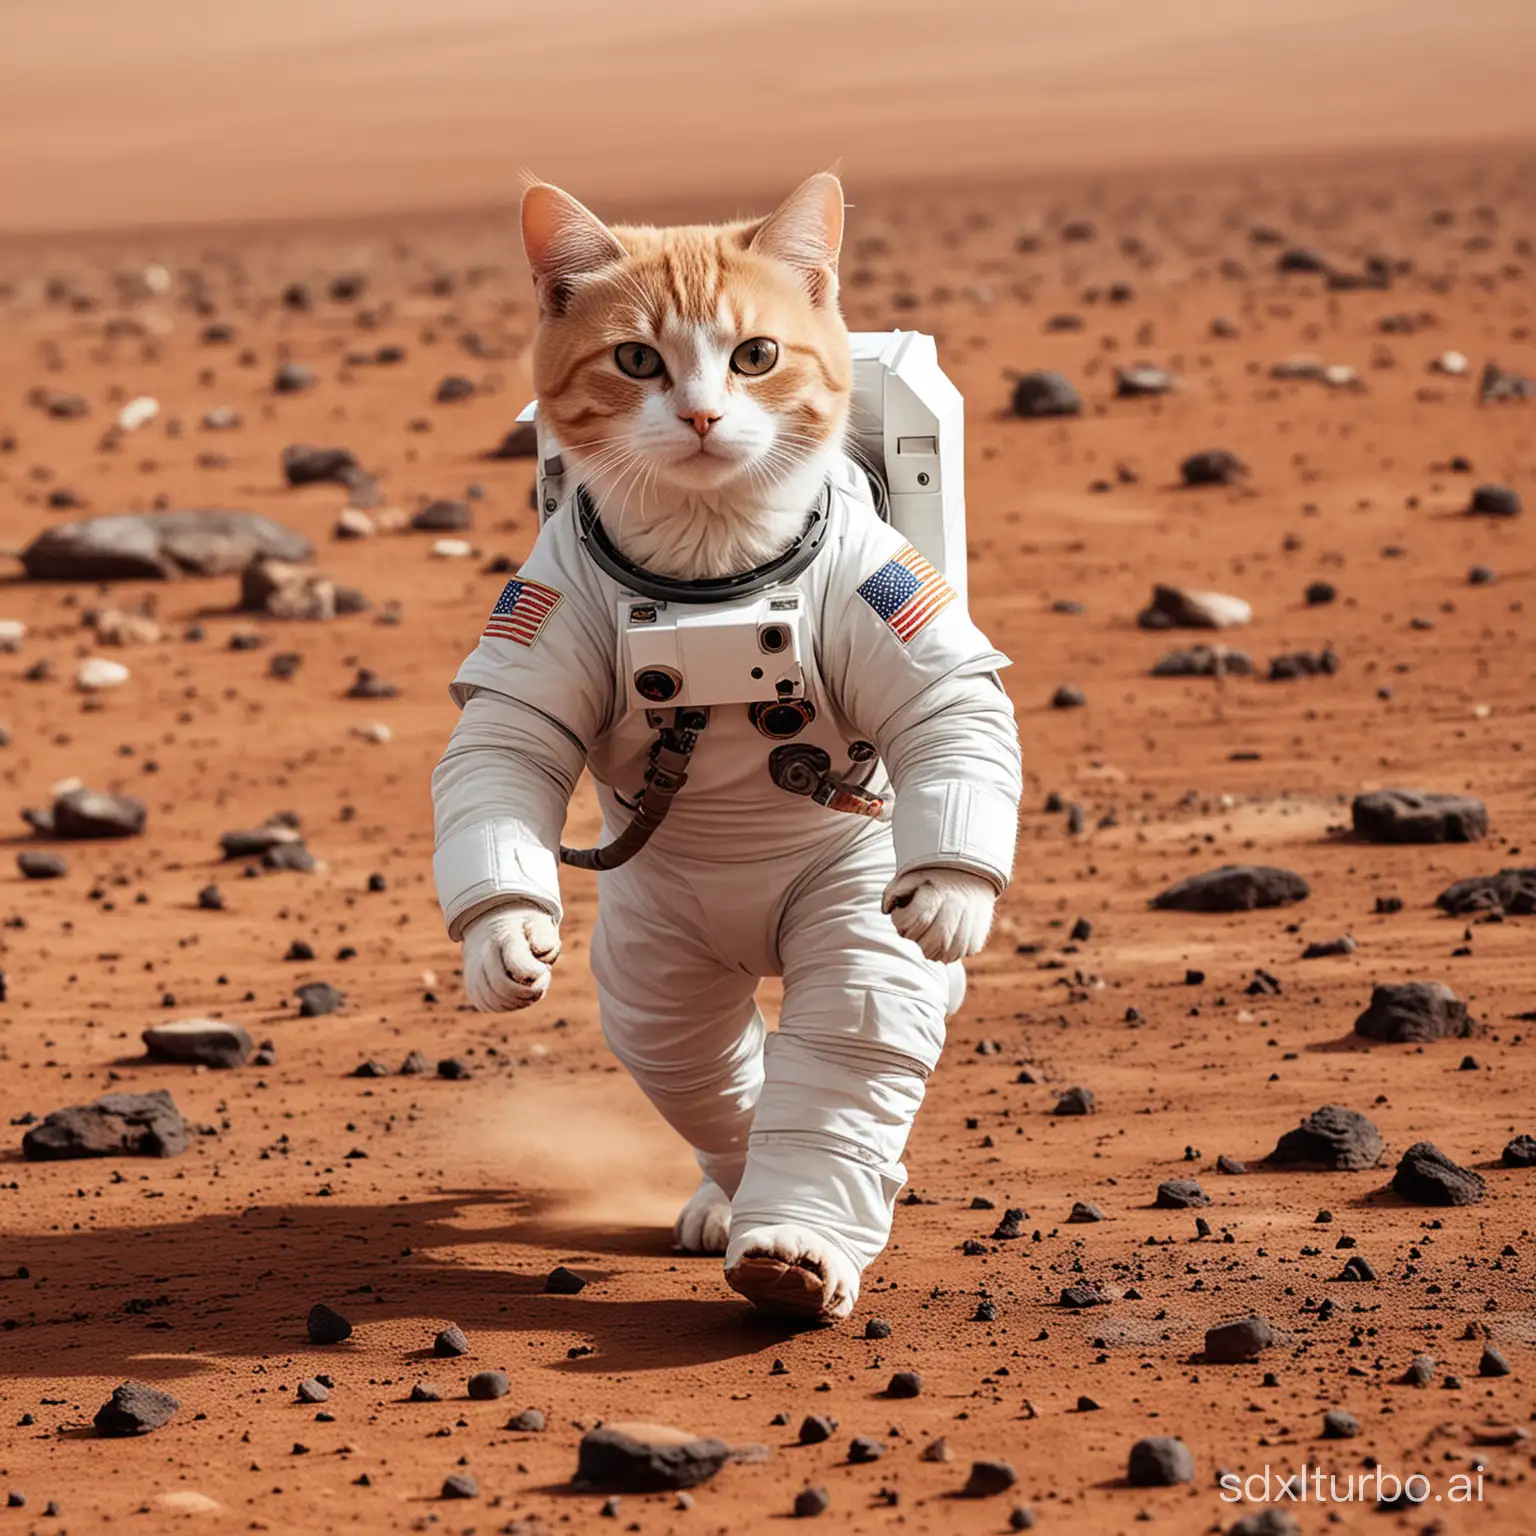 Exploring-Mars-Astronaut-Cat-Roaming-the-Martian-Surface